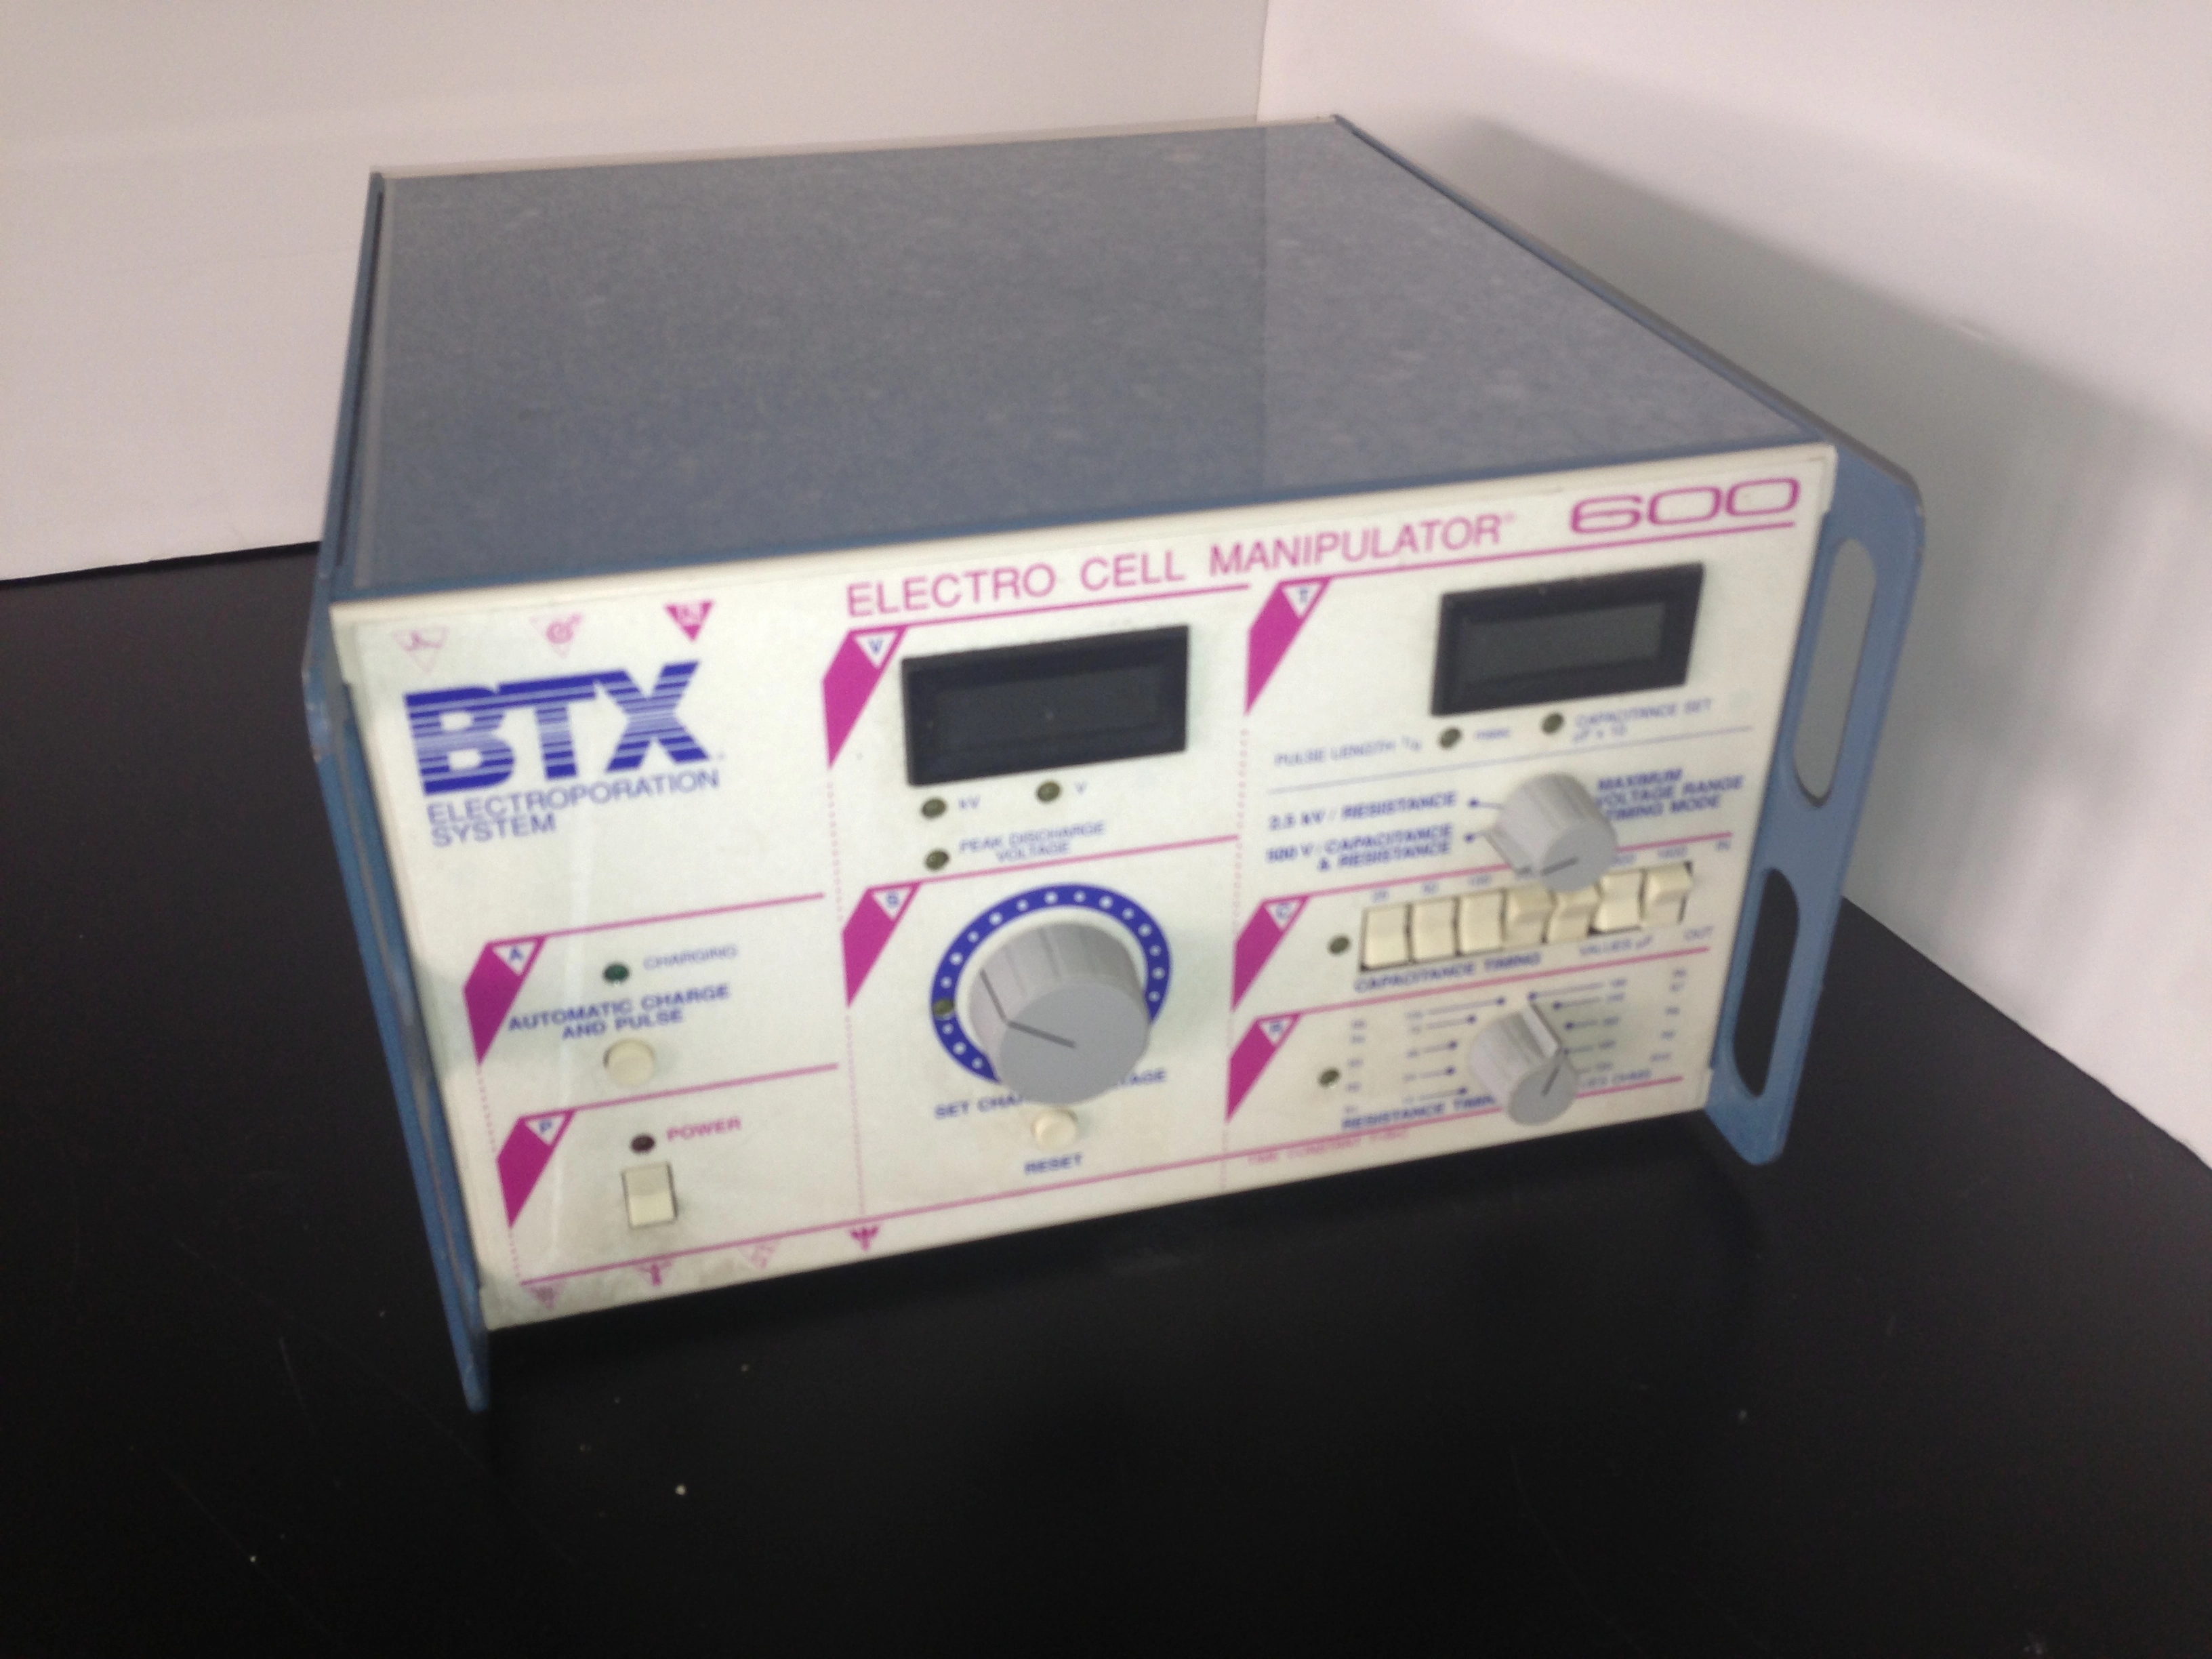 BTX Electroporation System Electrocell Manipulator 600 BTX Manipulator 600 BTX ECM-600 BTX Electroporation ECM-600 Electropor